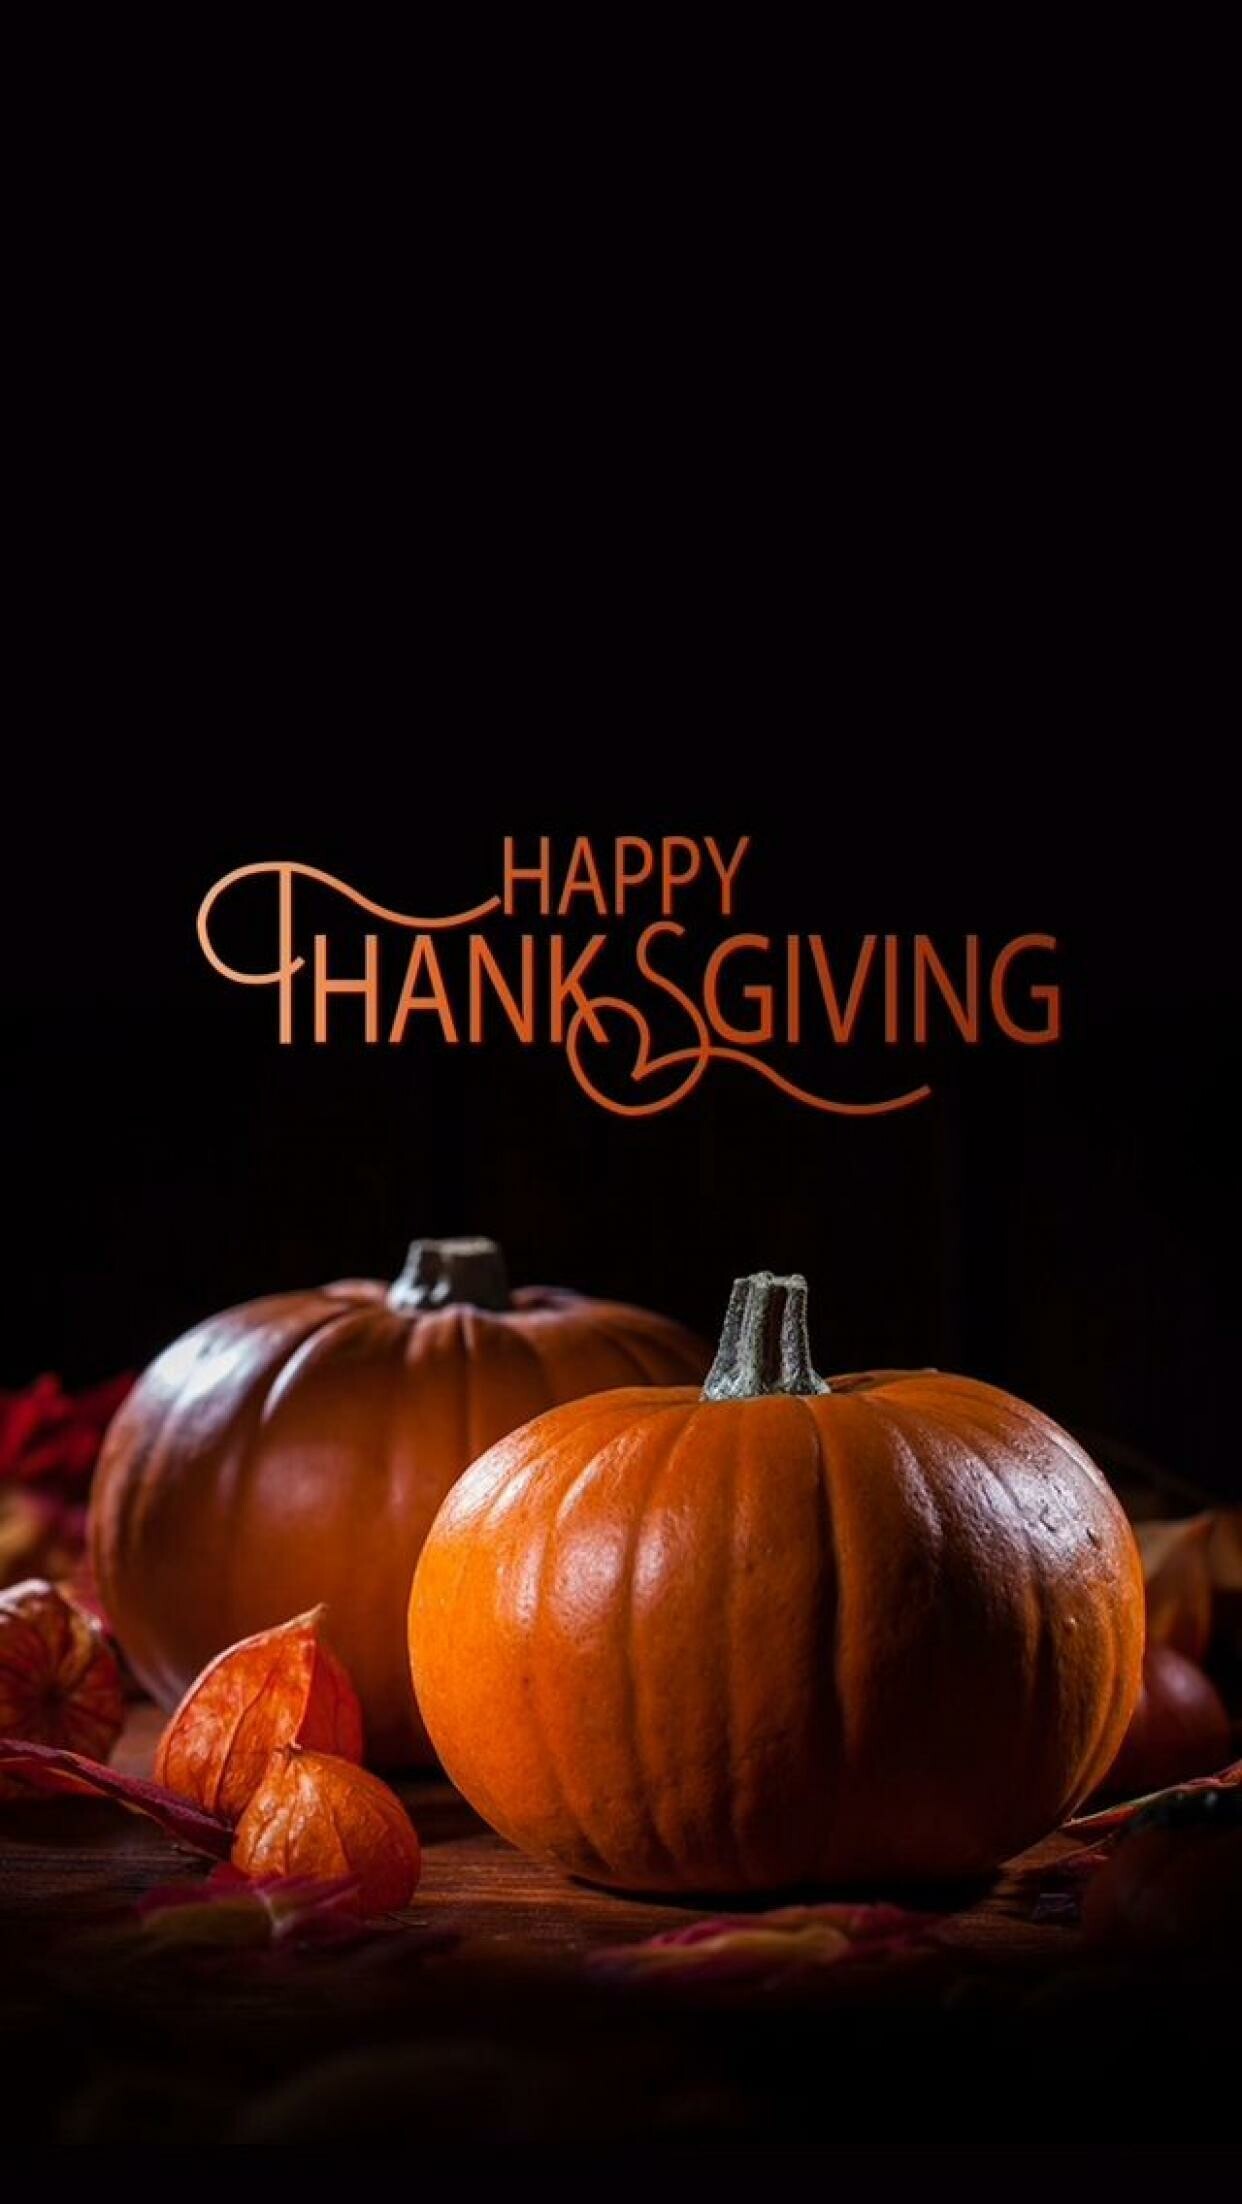 Thanksgiving: Pumpkin, Natural foods, Traditional decorations. 1250x2210 HD Wallpaper.